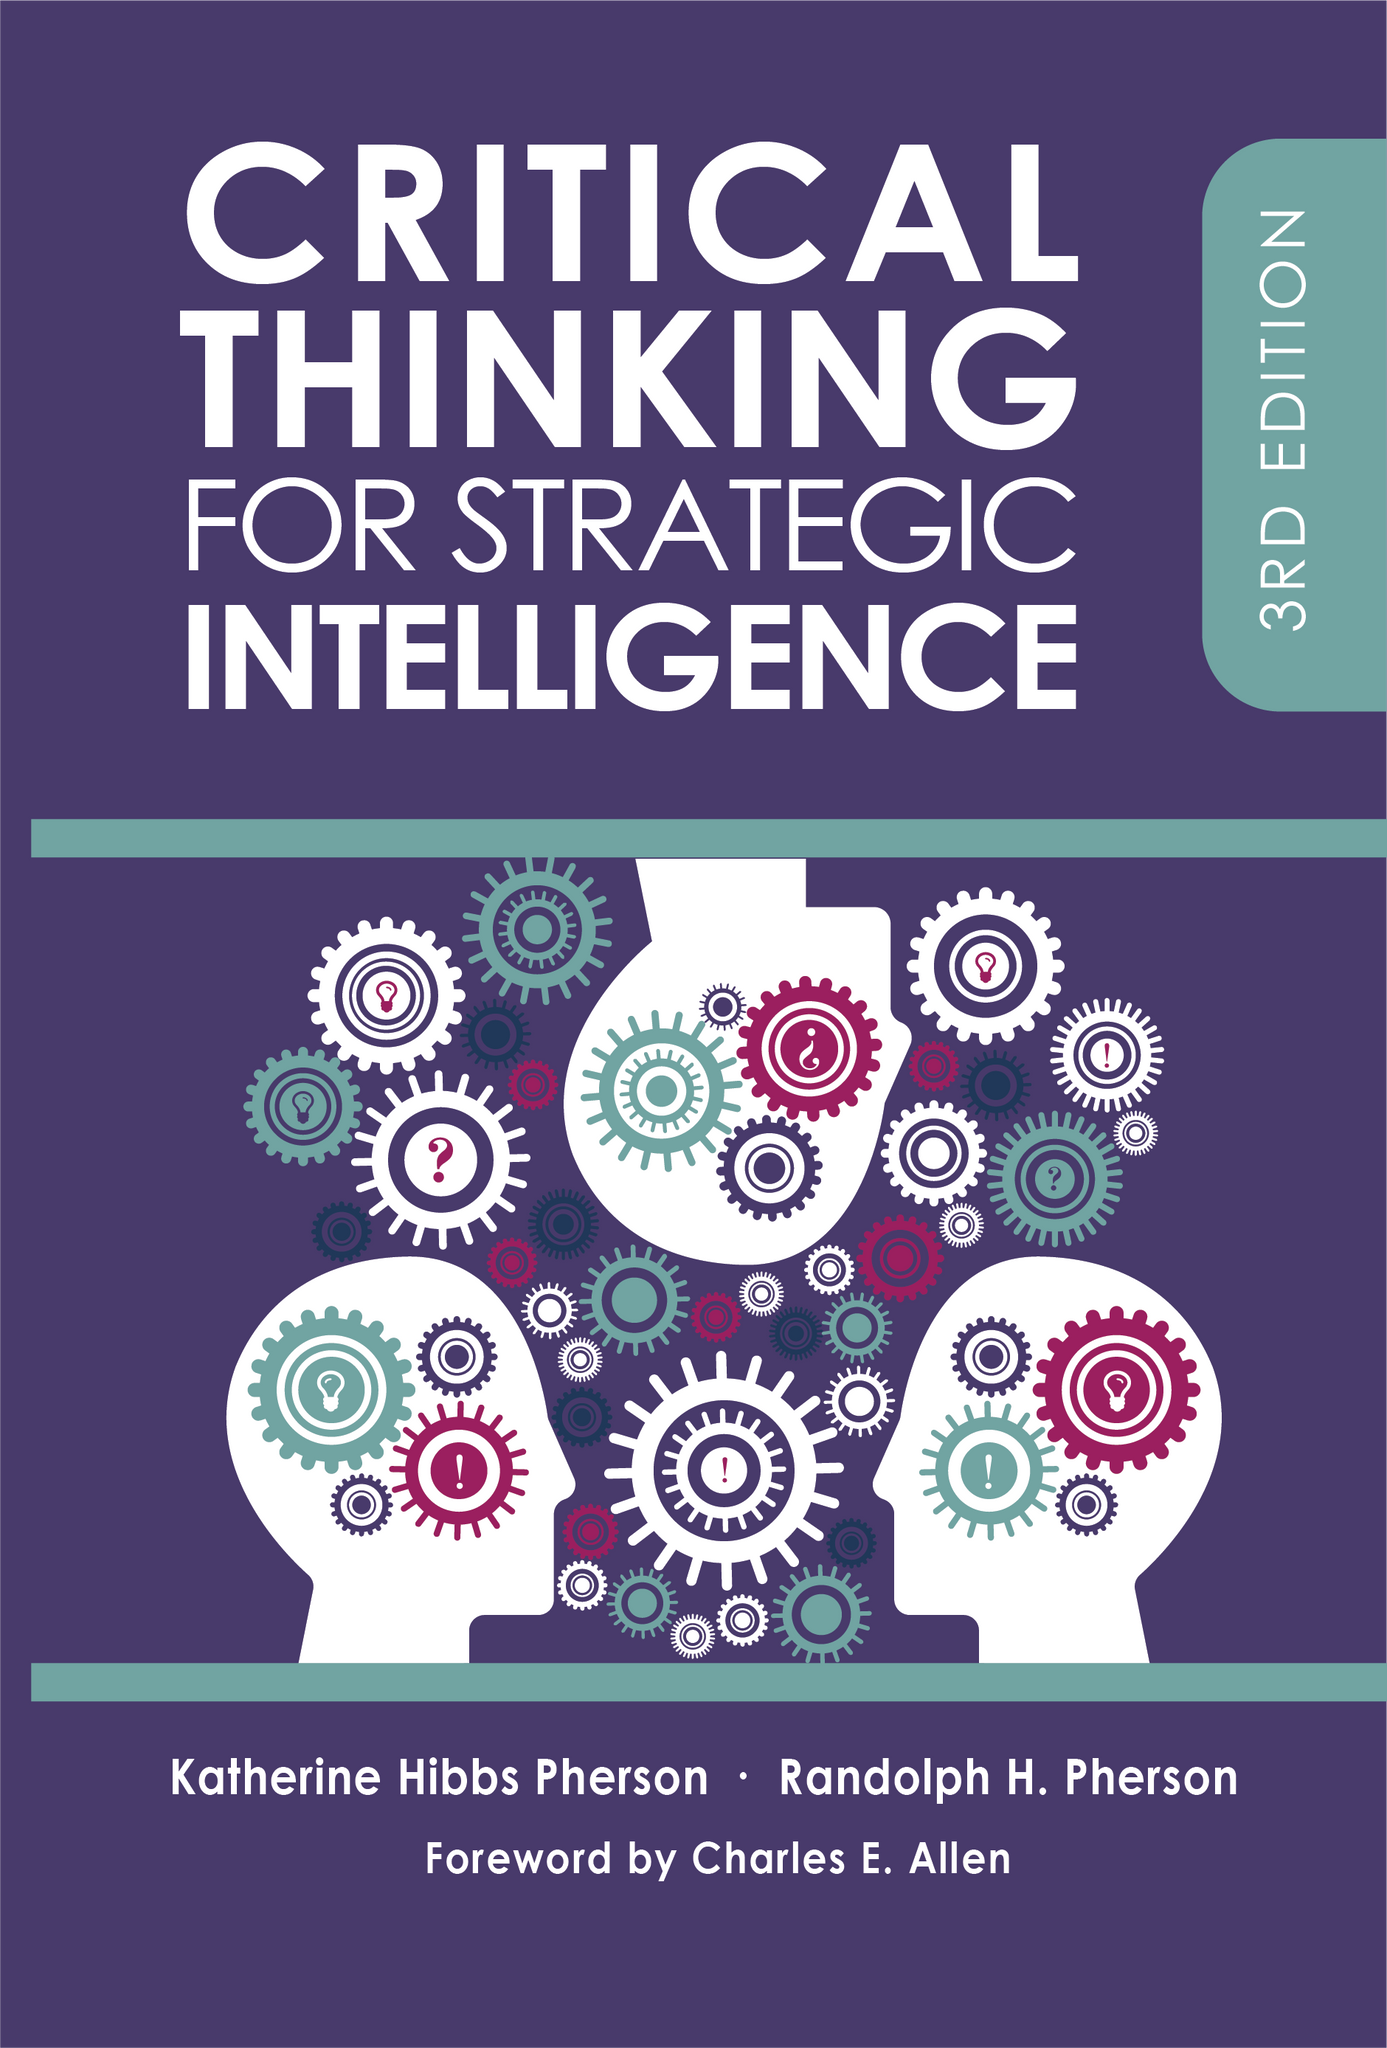 Critical Thinking for Strategic Intelligence. 3rd ed.